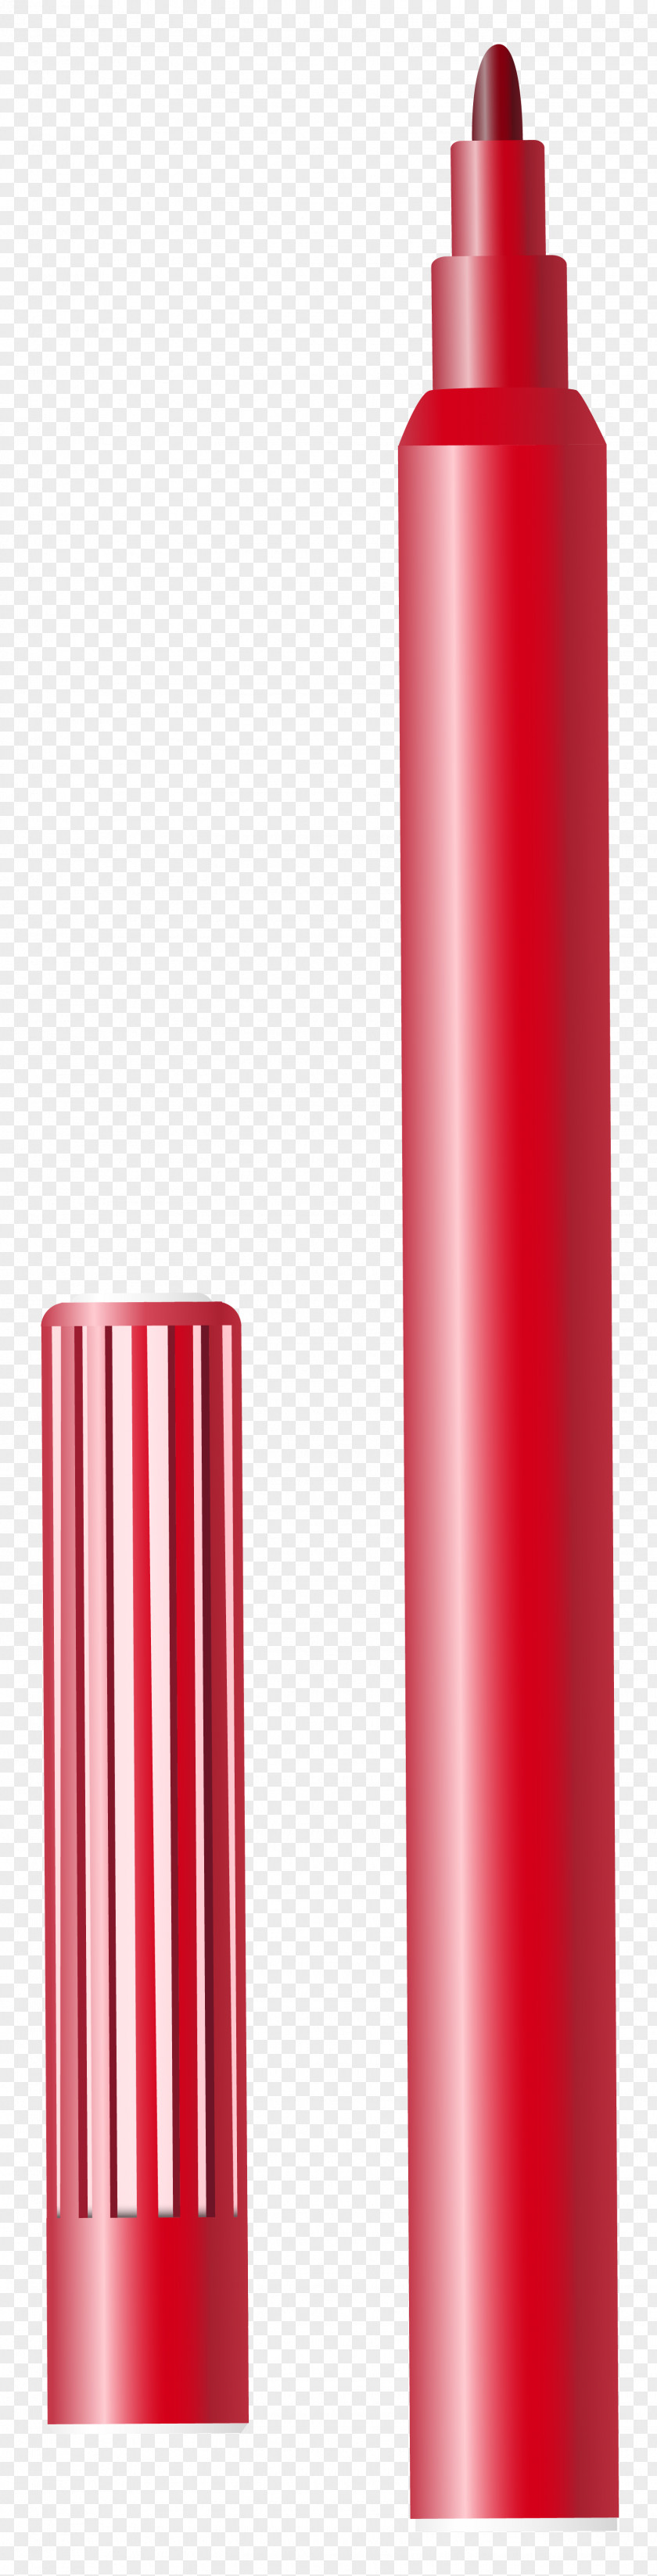 Red Felt Tip Pen Clipart Image Marker Pencil Clip Art PNG